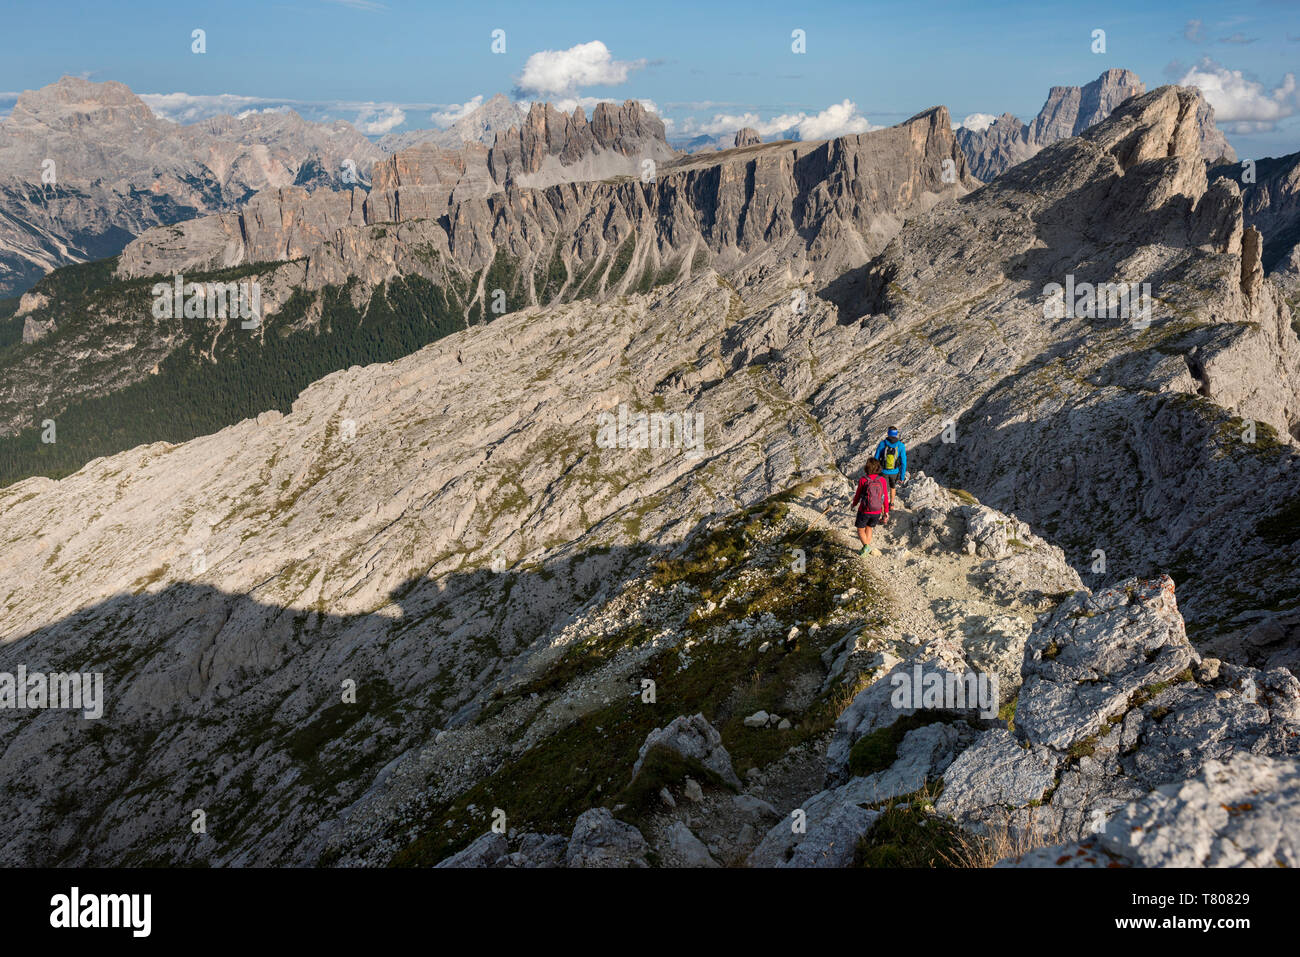 Hiking in typical mountainous terrain of the Dolomites range of the Alps on the Alta Via 1 trekking route near Rifugio Nuvolau, Belluno, Veneto, Italy Stock Photo